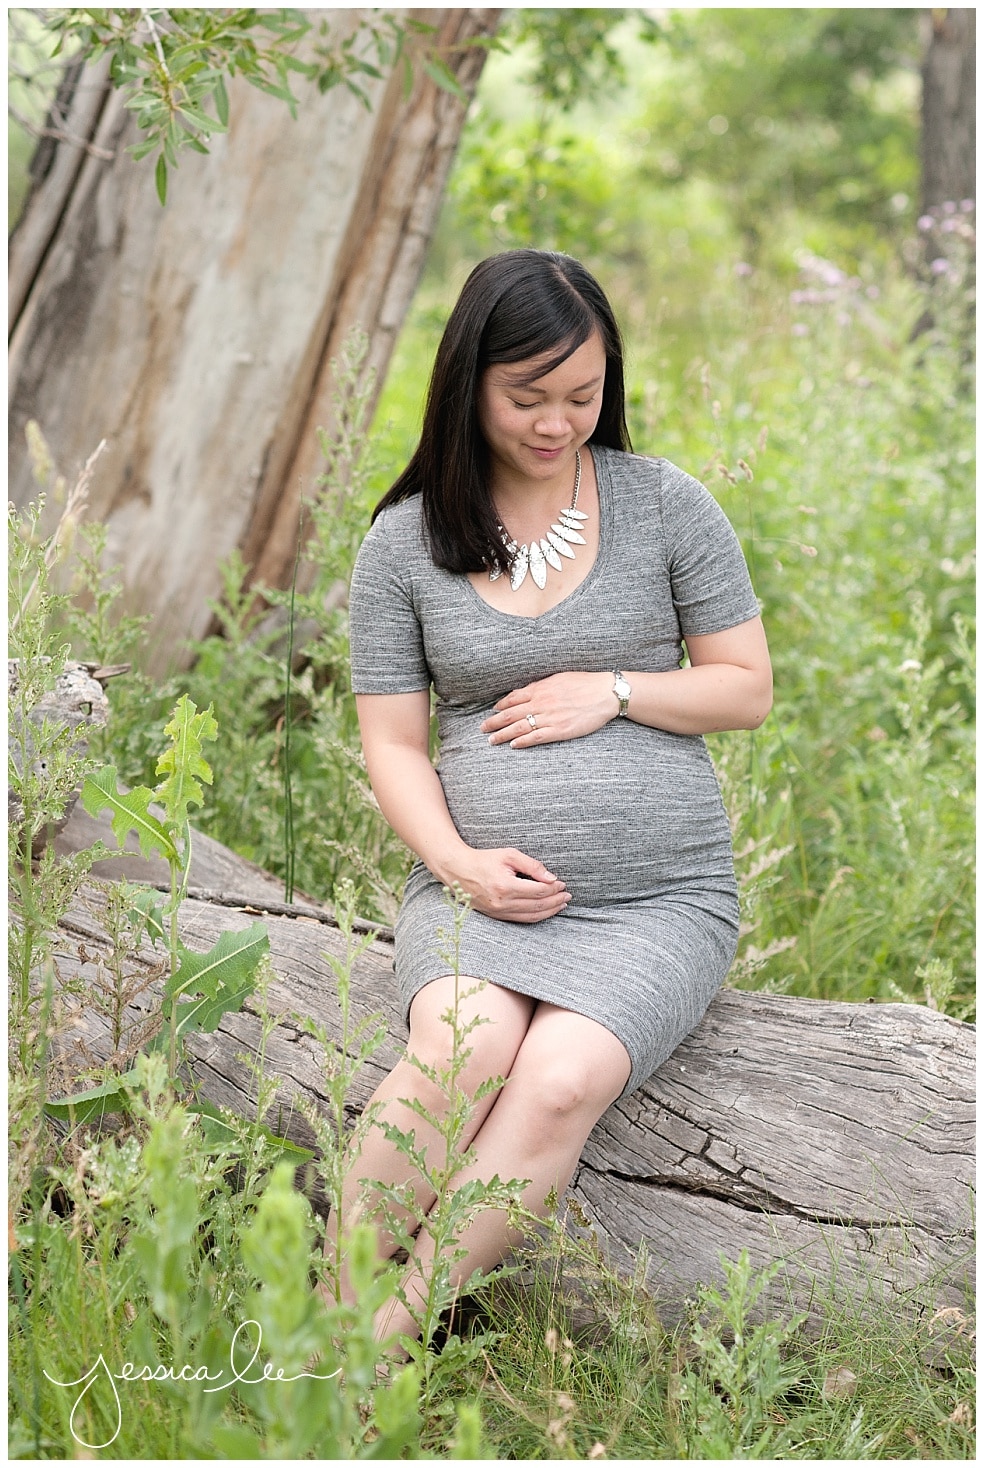 Broomfield Newborn Photographer, Jessica Lee Photography, maternity photos in tall grass